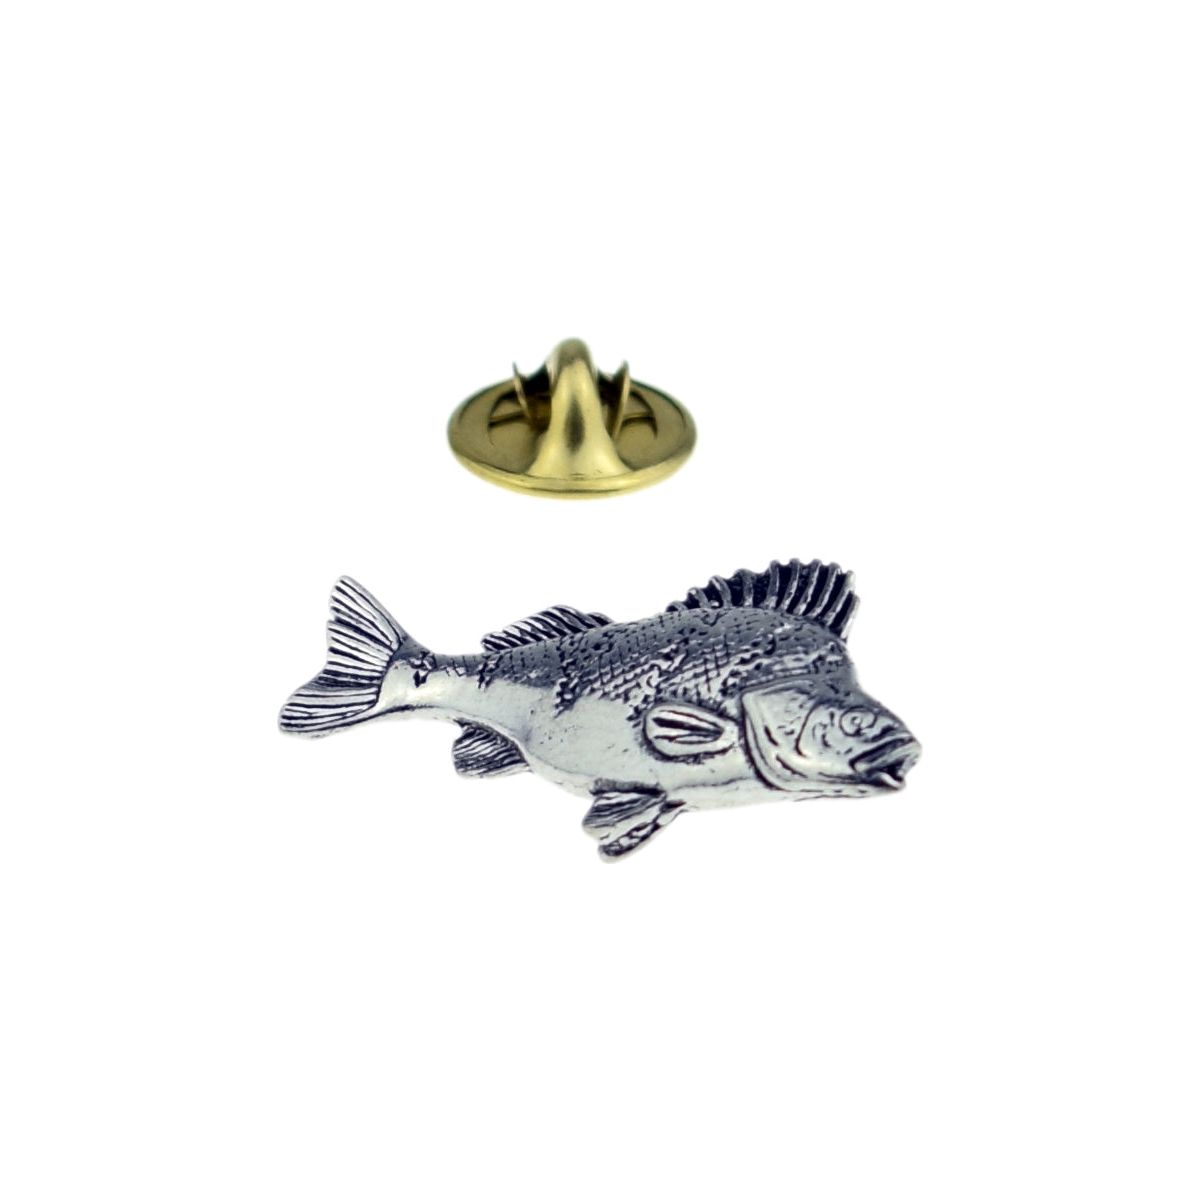 Large Perch fish fishing English Pewter Lapel Pin Badge - Ashton and Finch